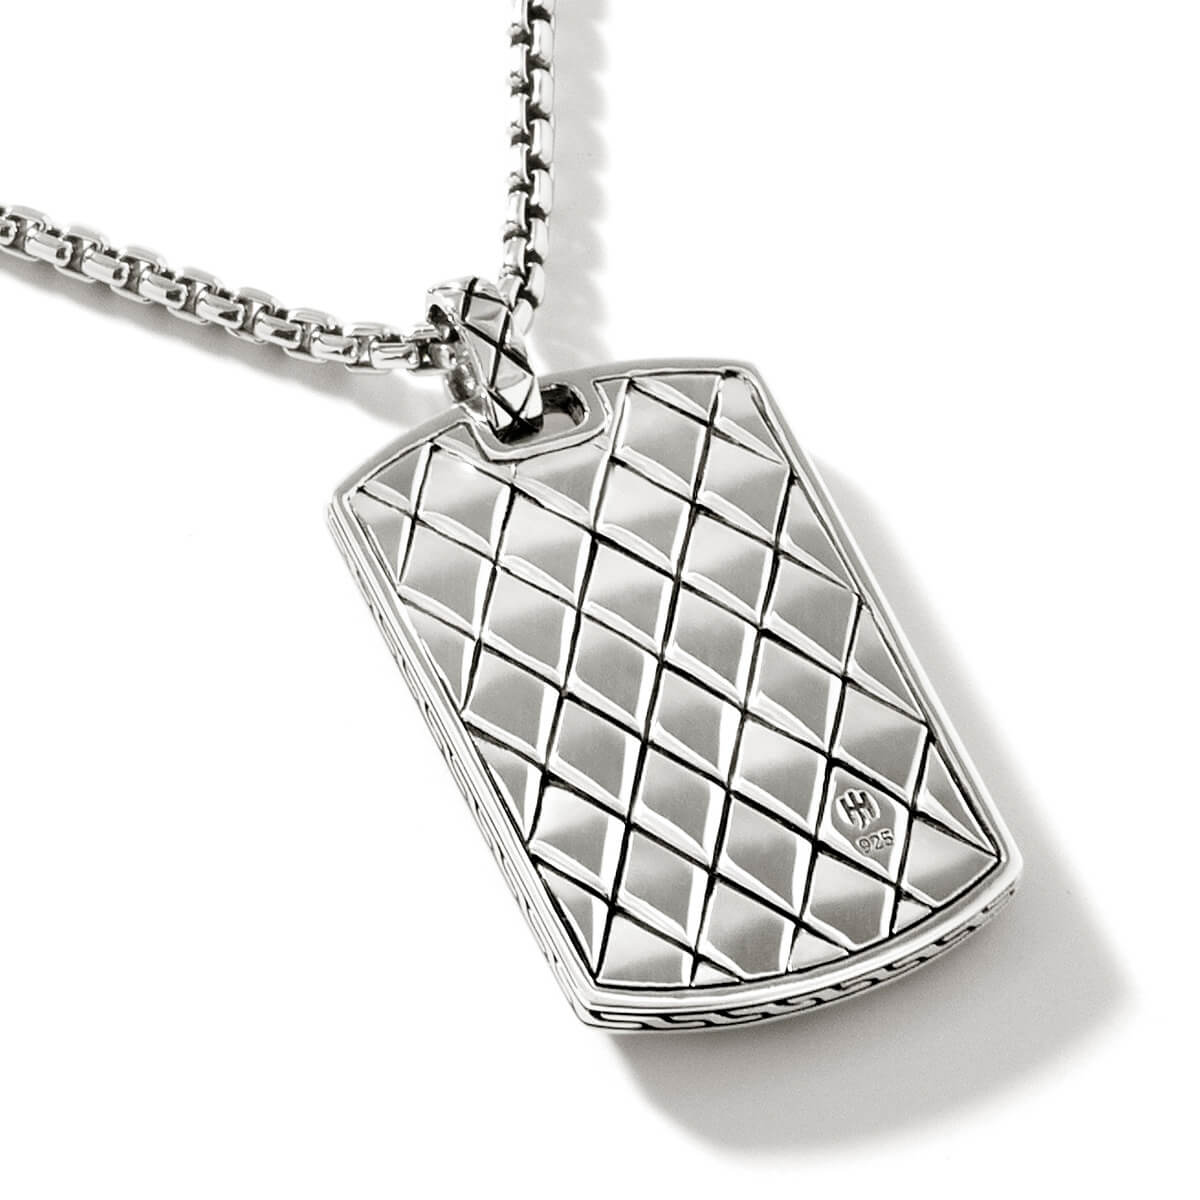 Crucible Men's Tungsten Carbide High Polished Diamond Dog Tag Pendant Necklace Silver